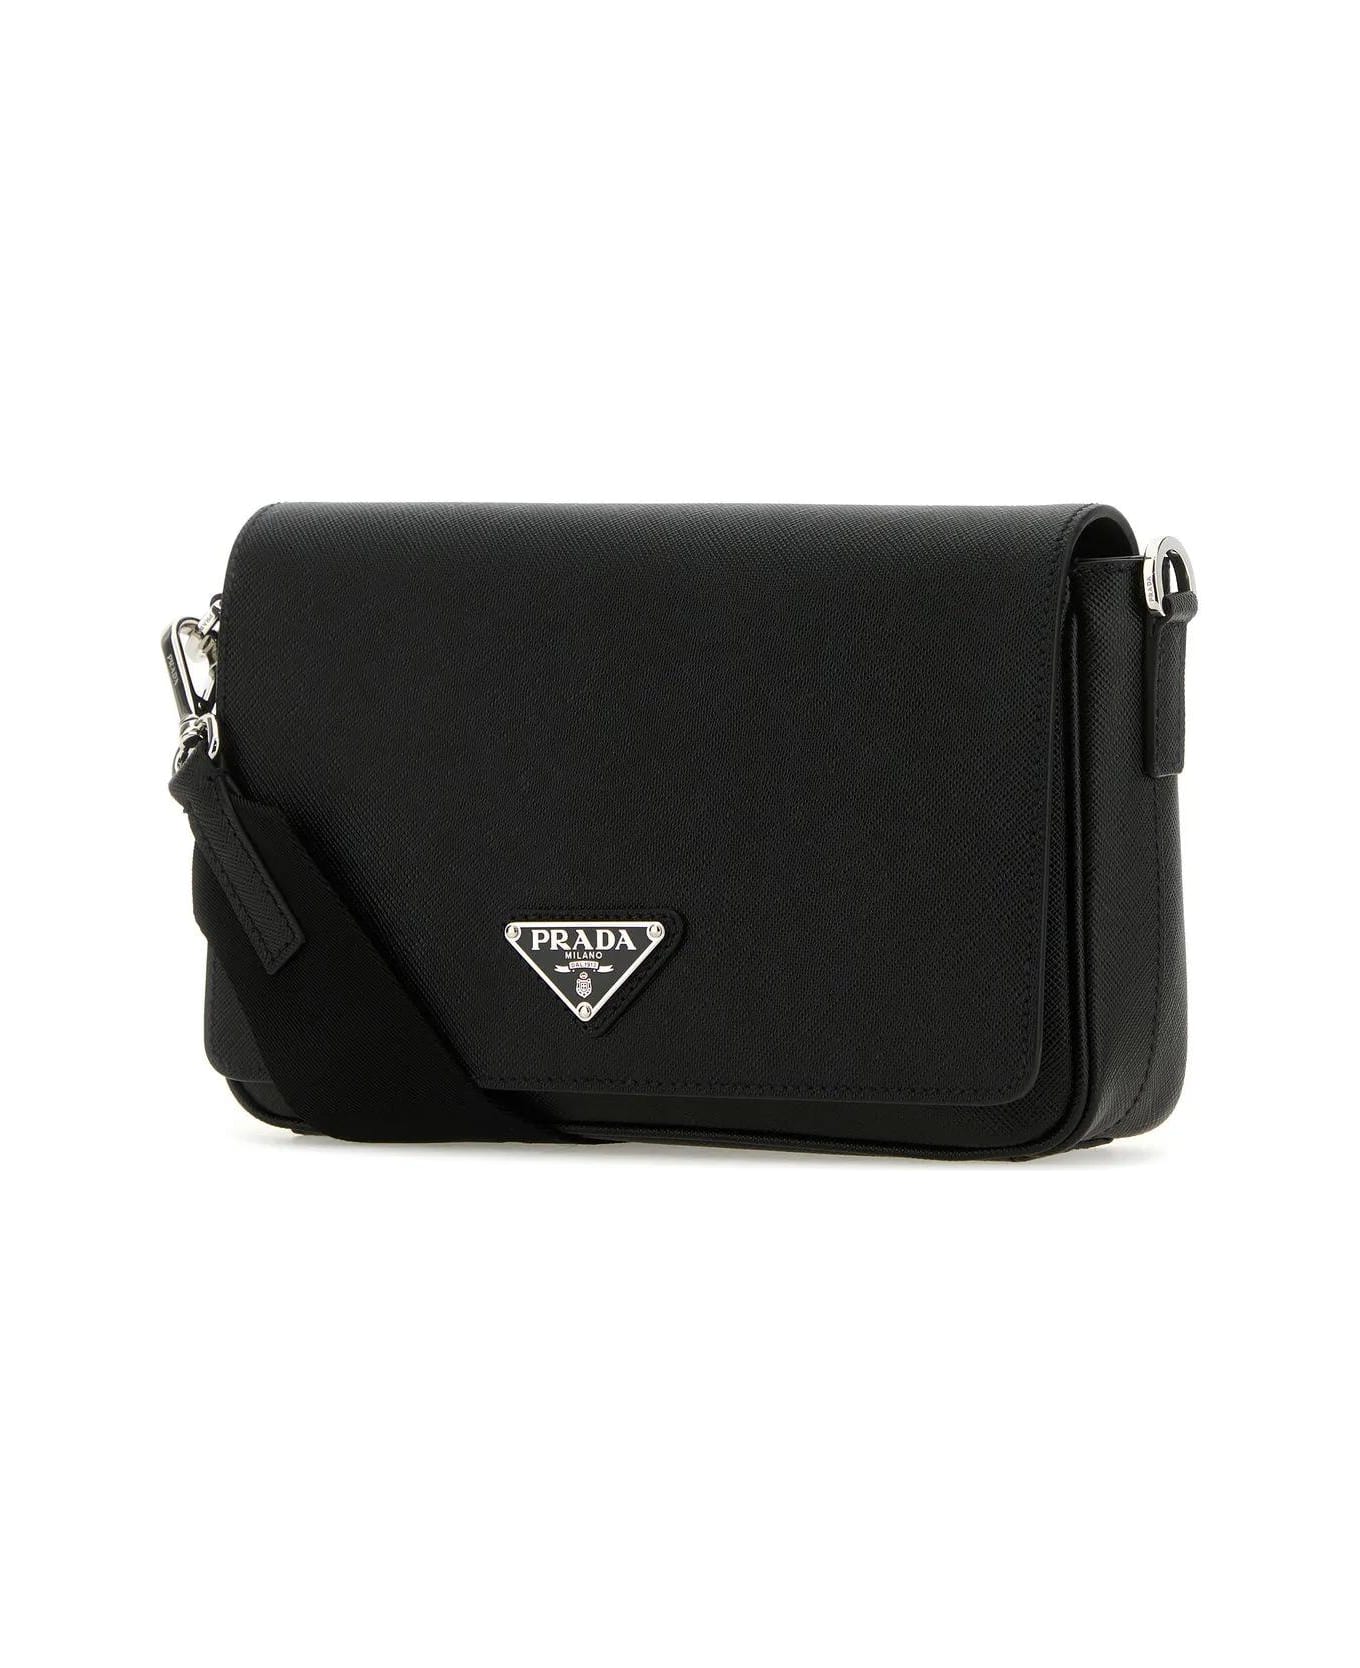 Prada Black Leather Crossbody Bag - Nero